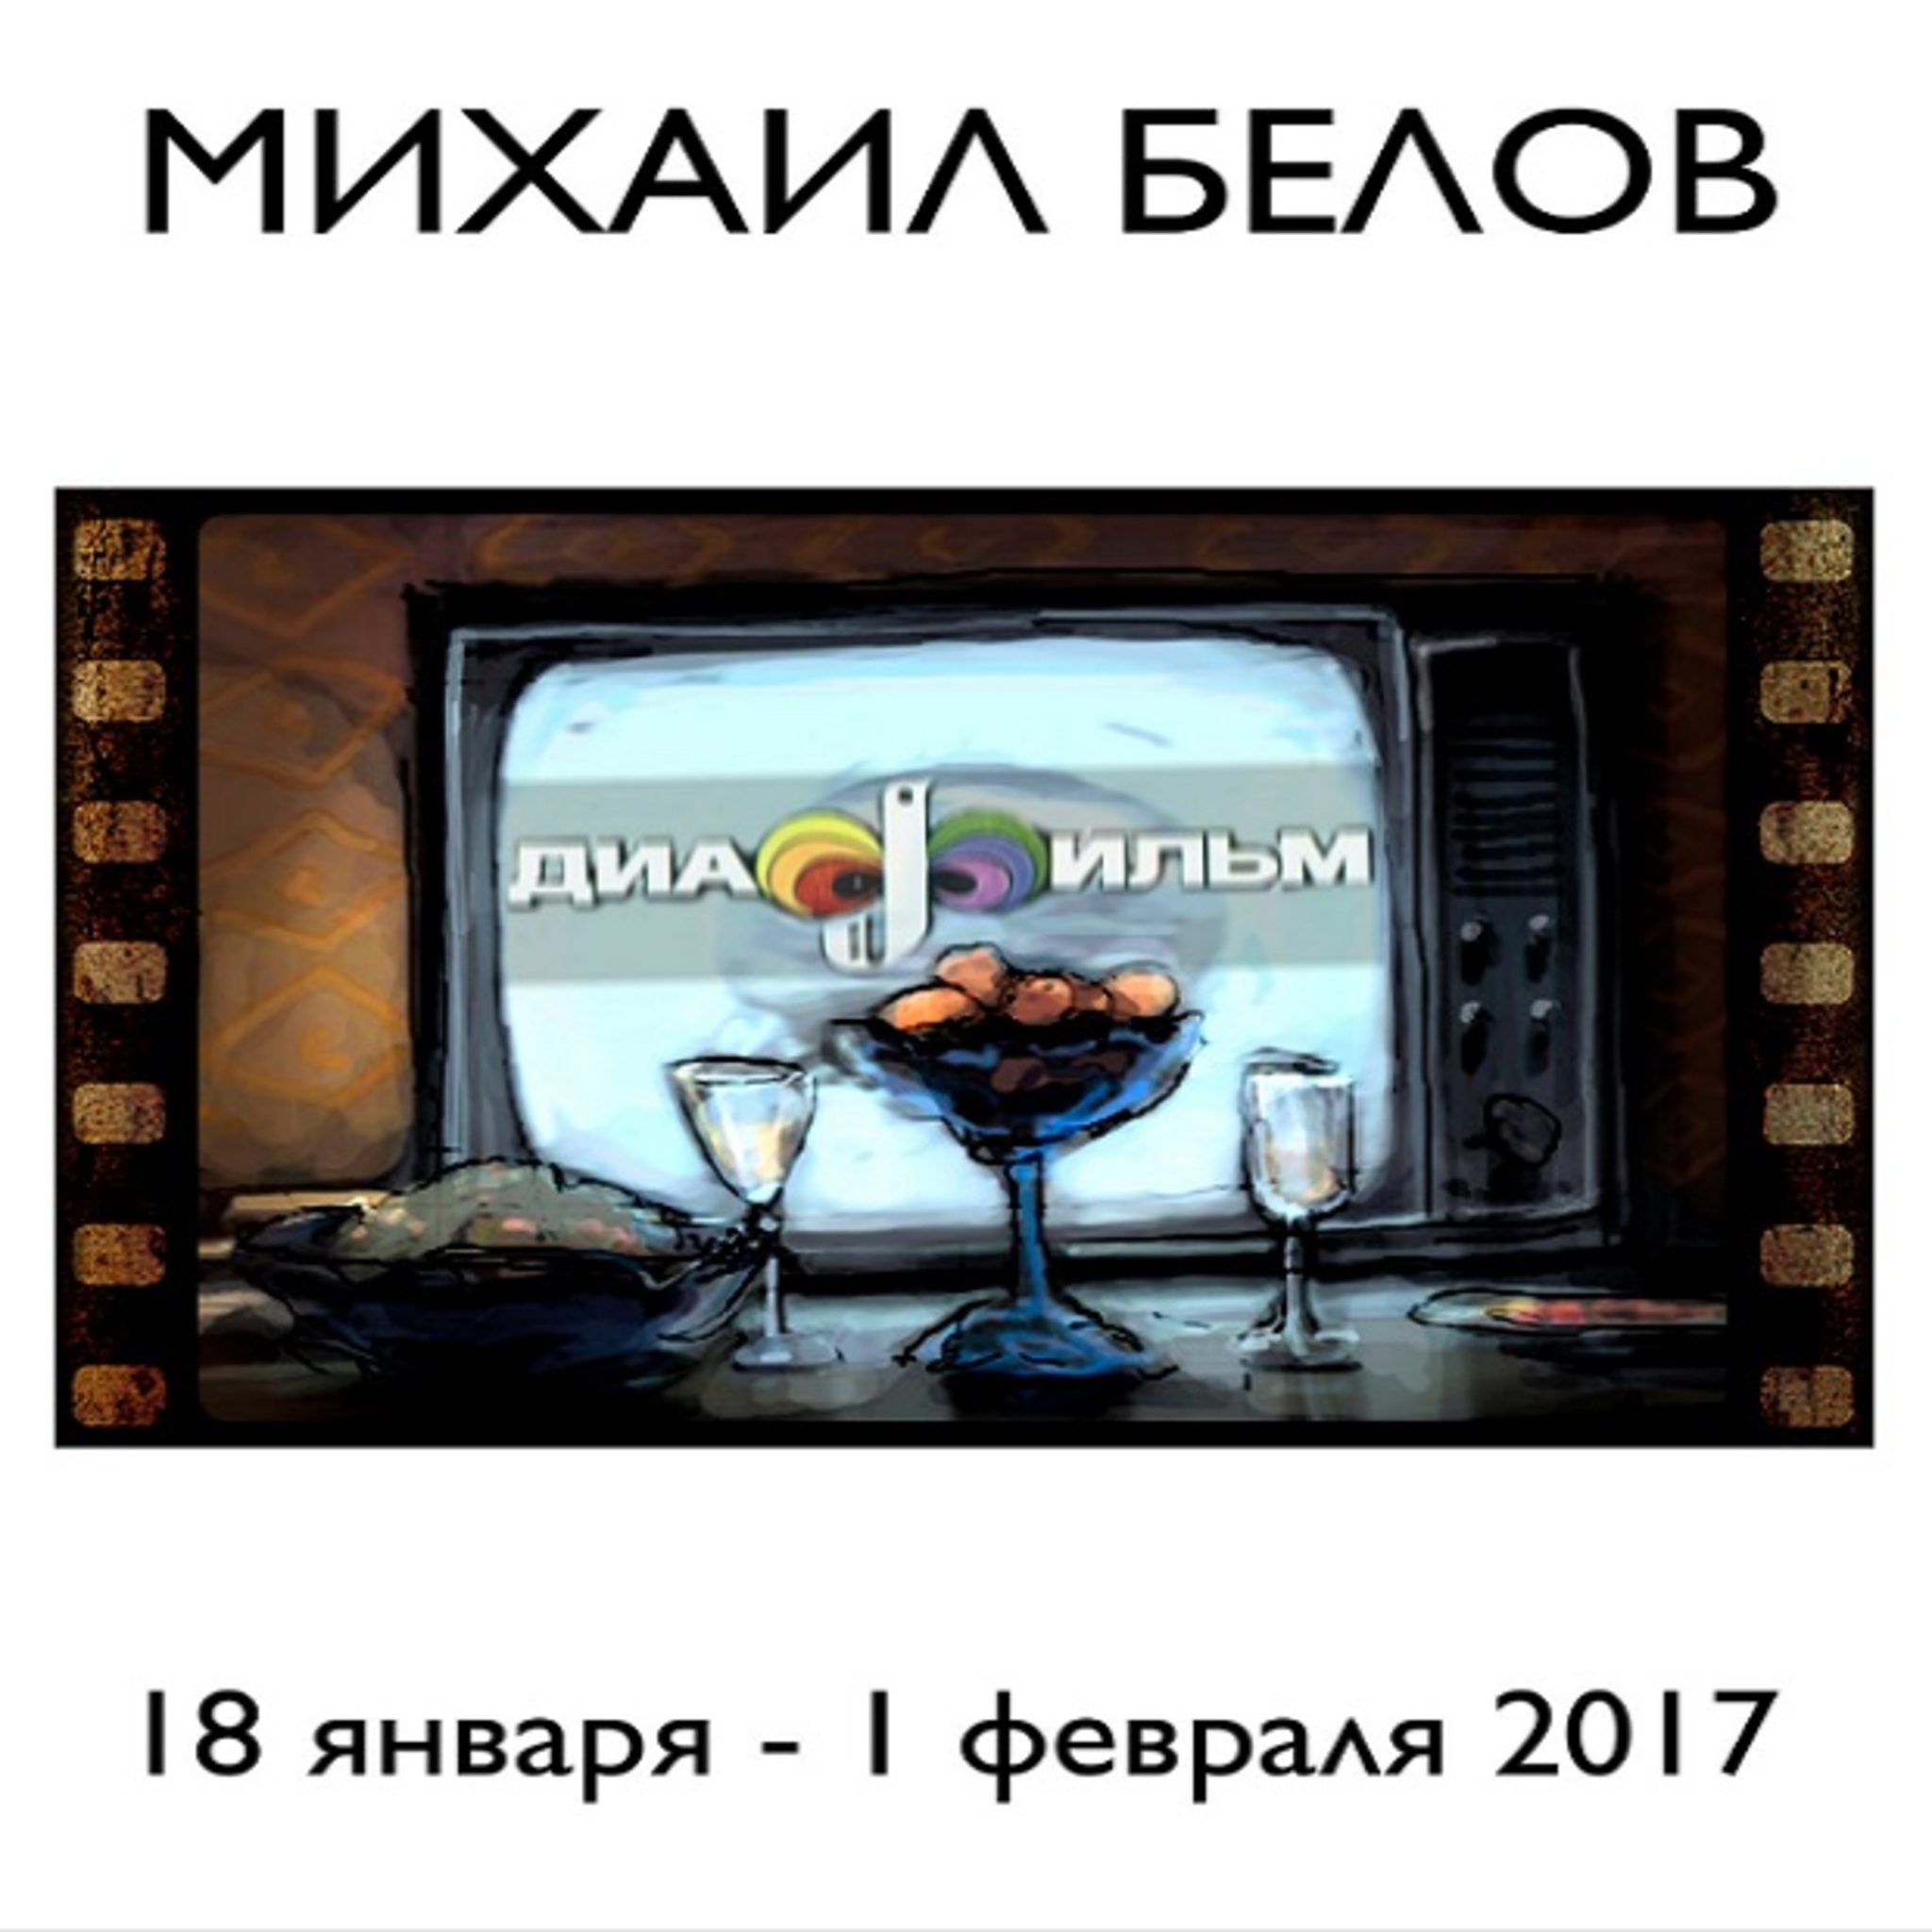 Exhibition Mikhail Belov filmstrip